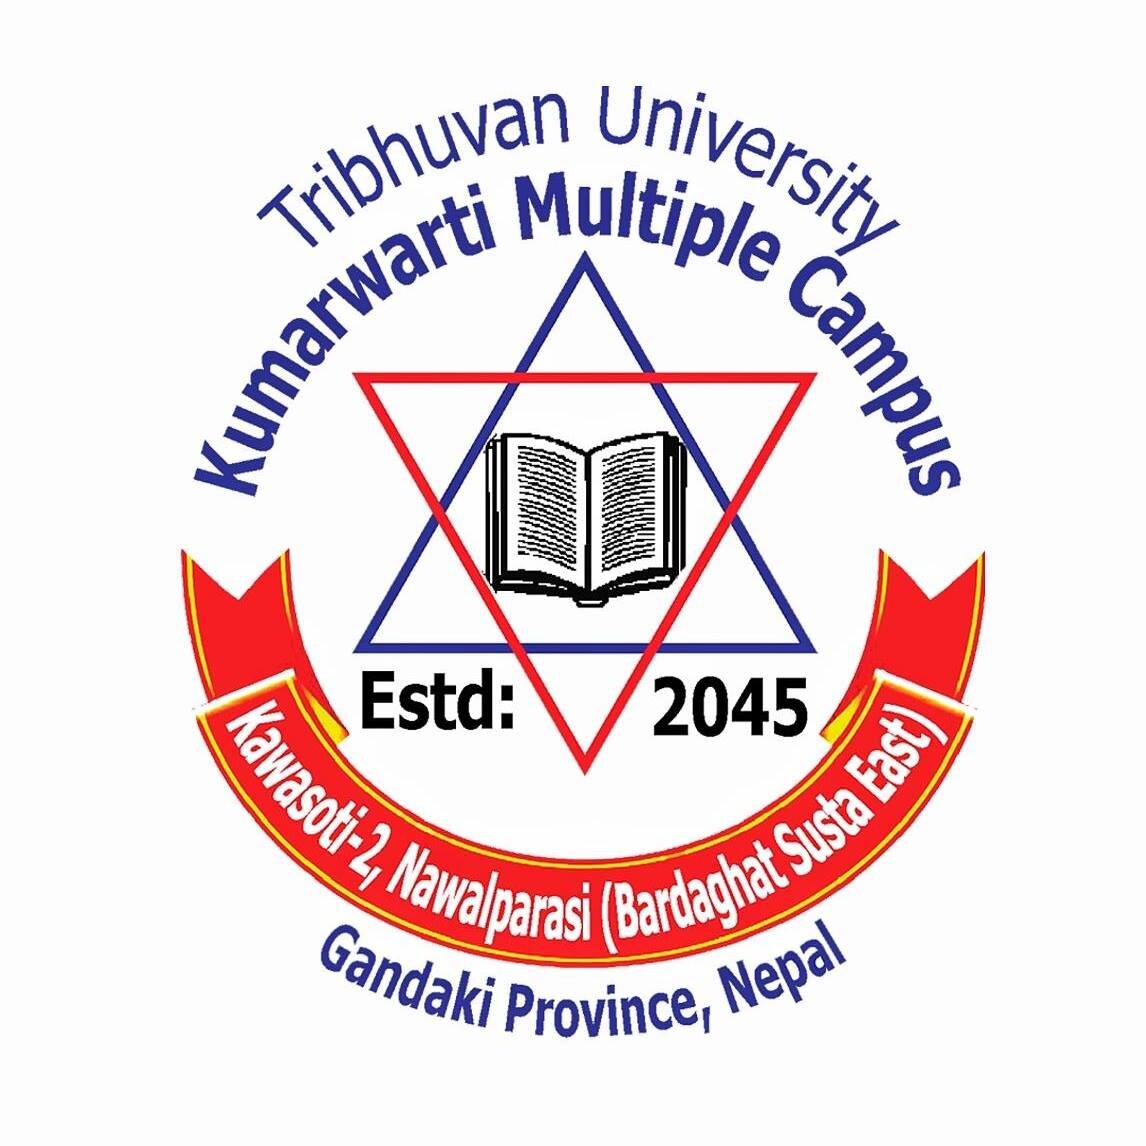 Kumarwarti Multiple Campus